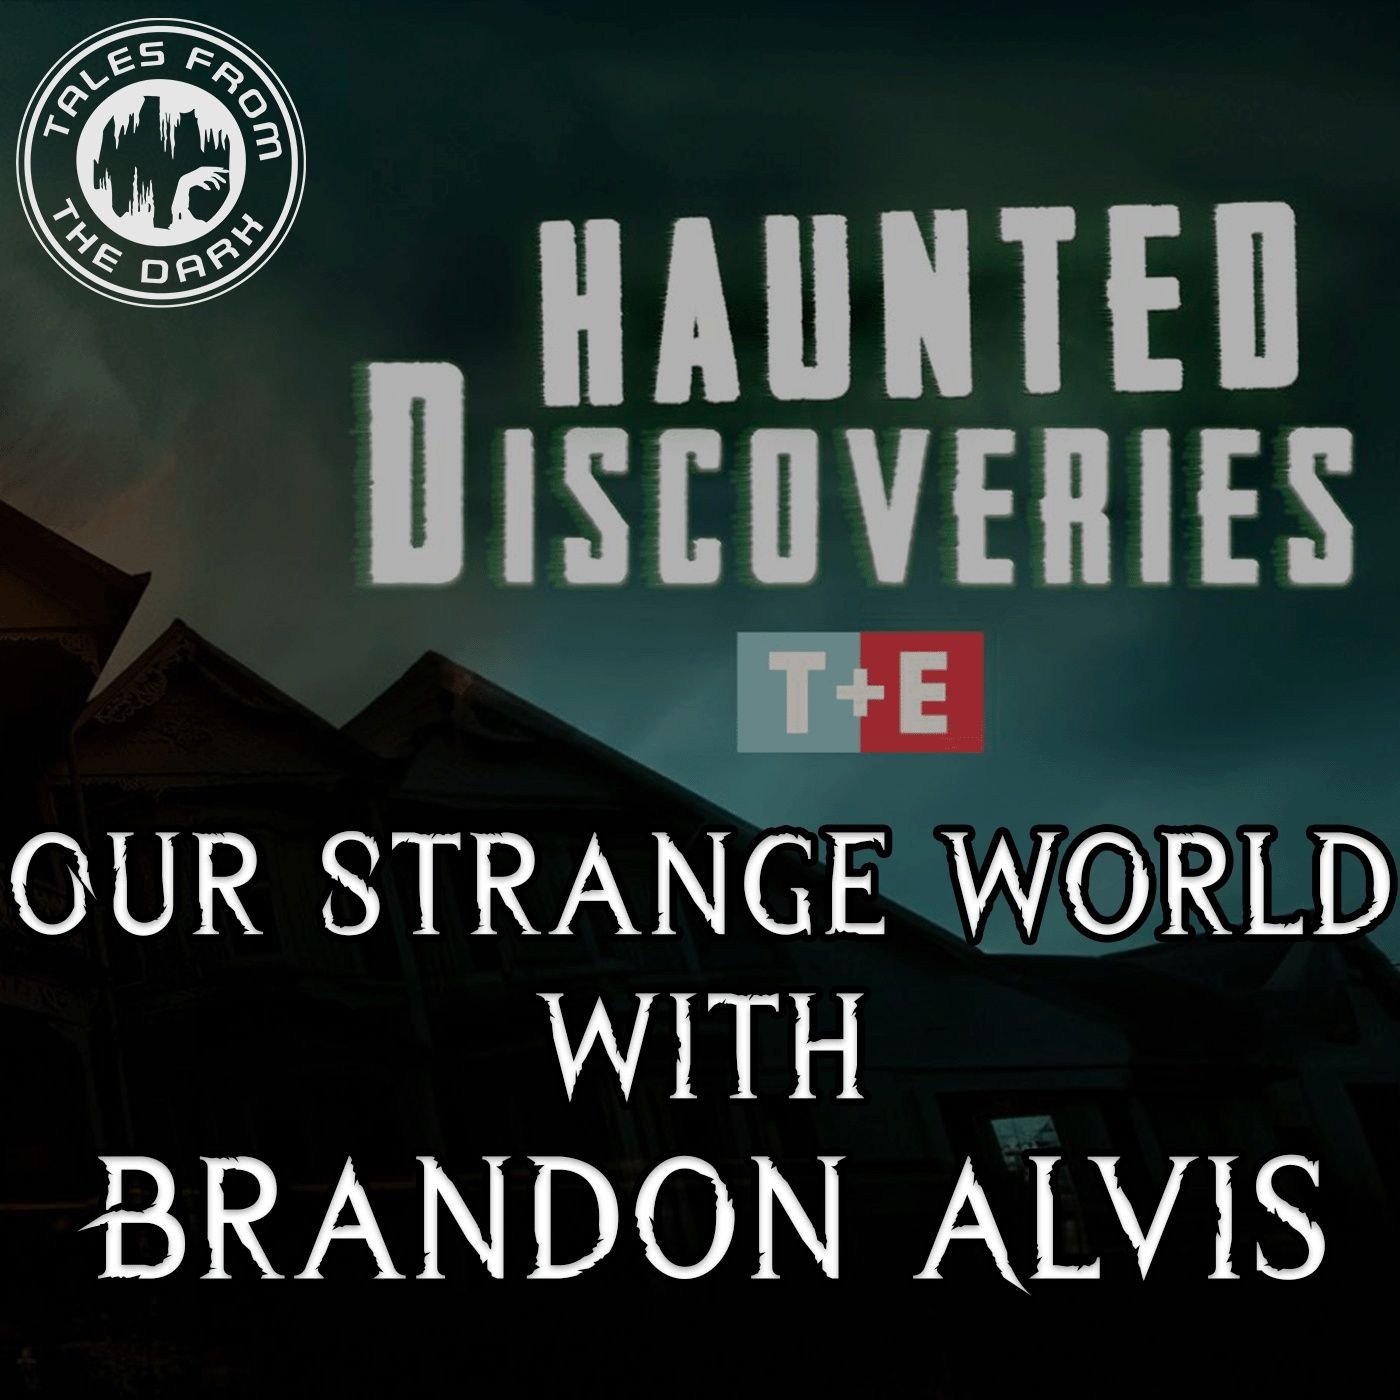 Our Strange World With Brandon Alvis